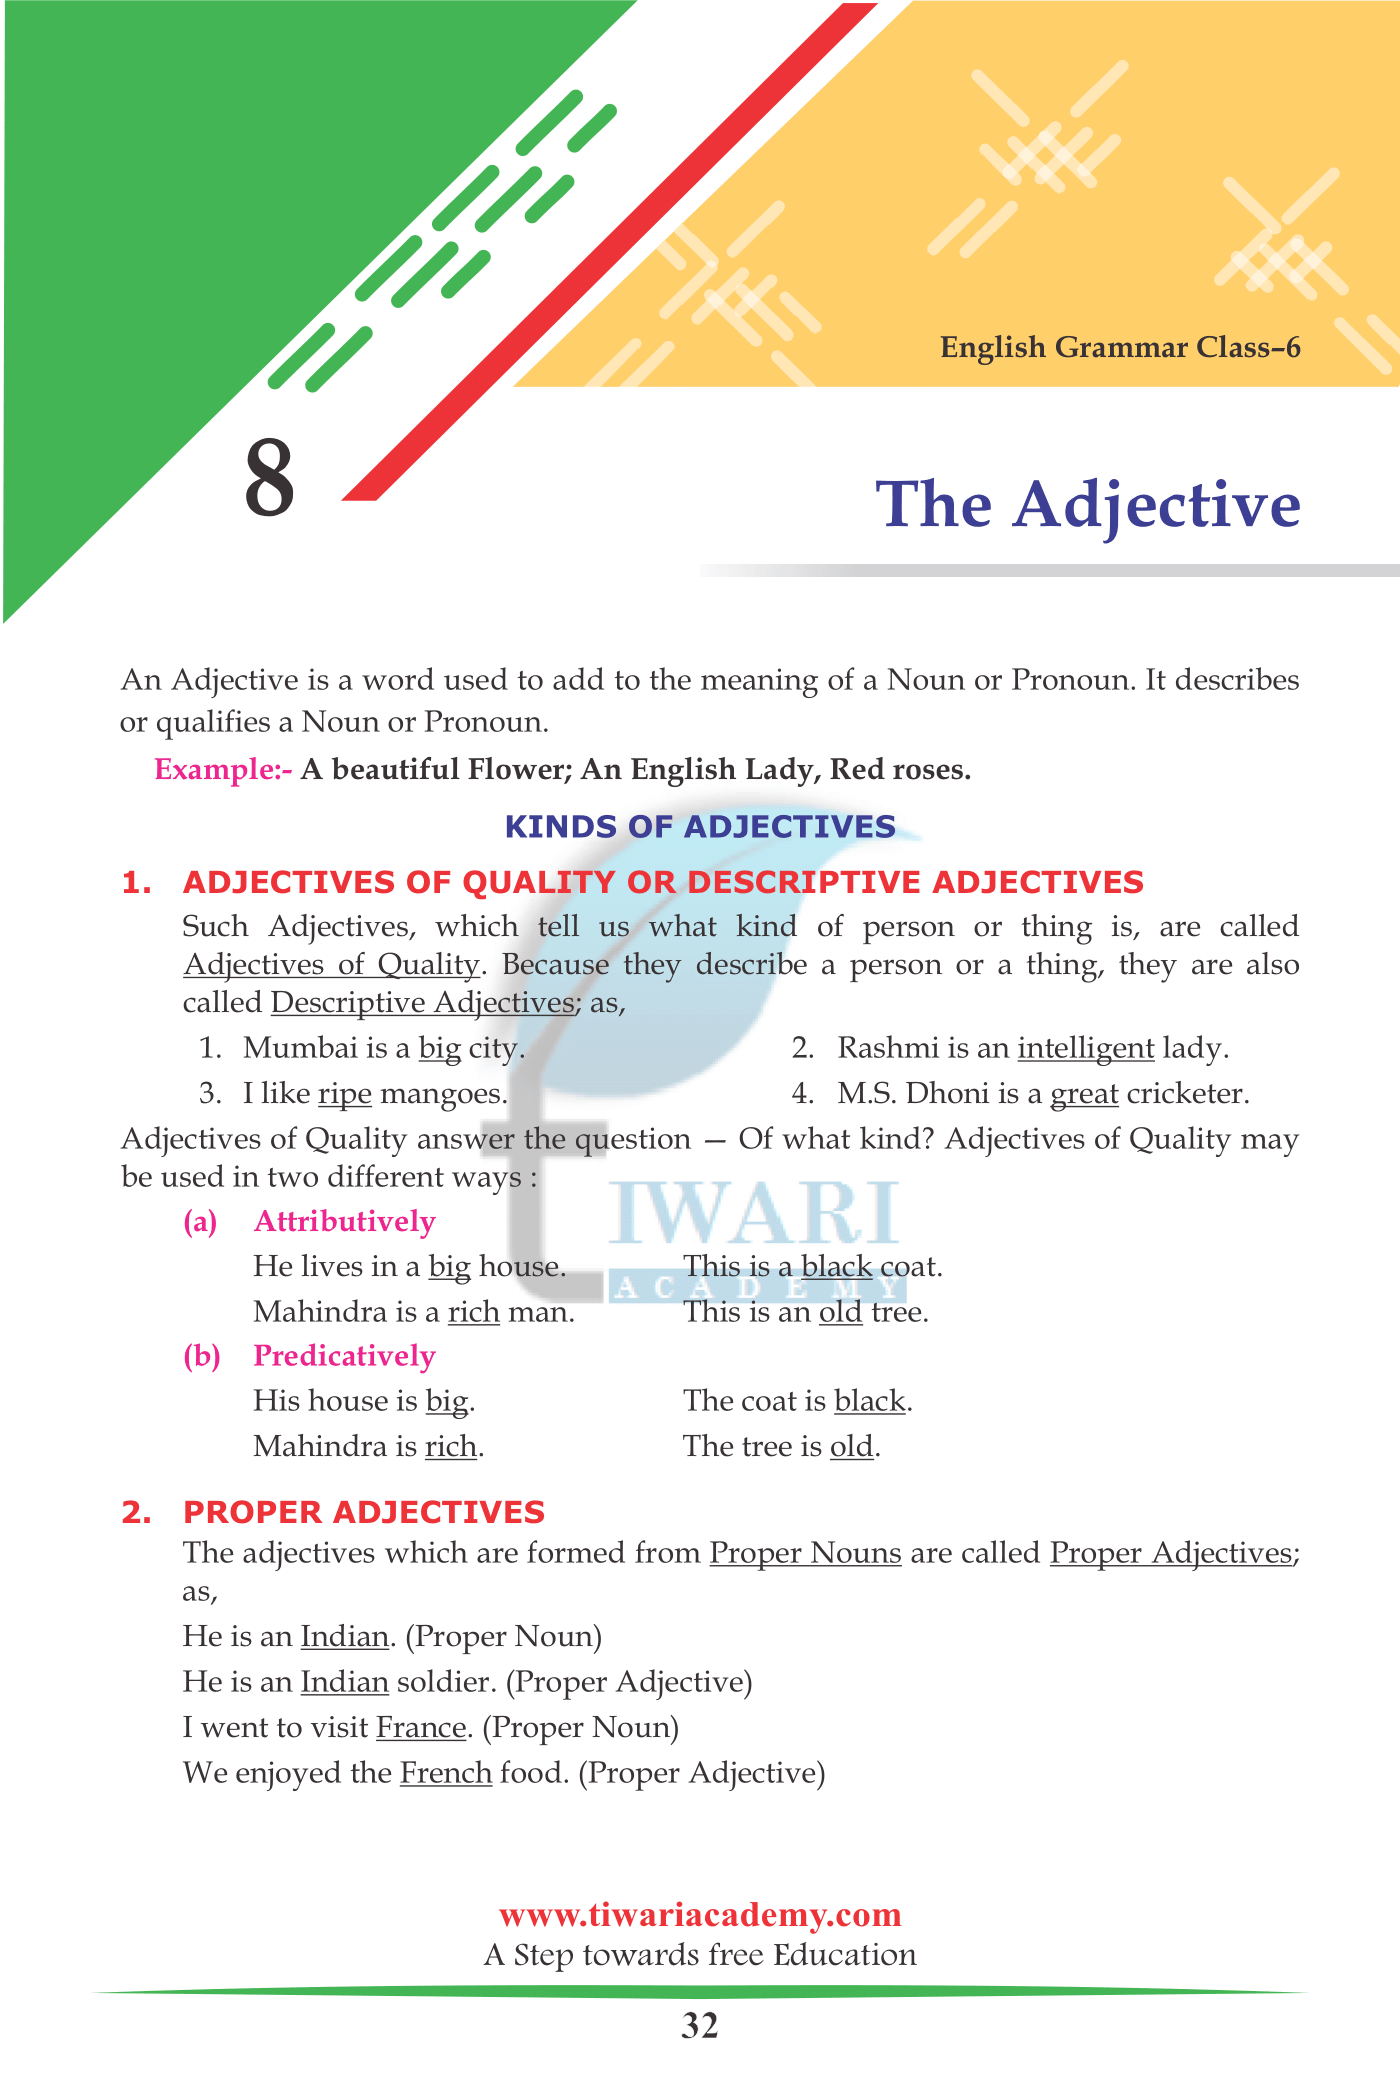 Class 6 English Grammar Chapter 8: The Adjective